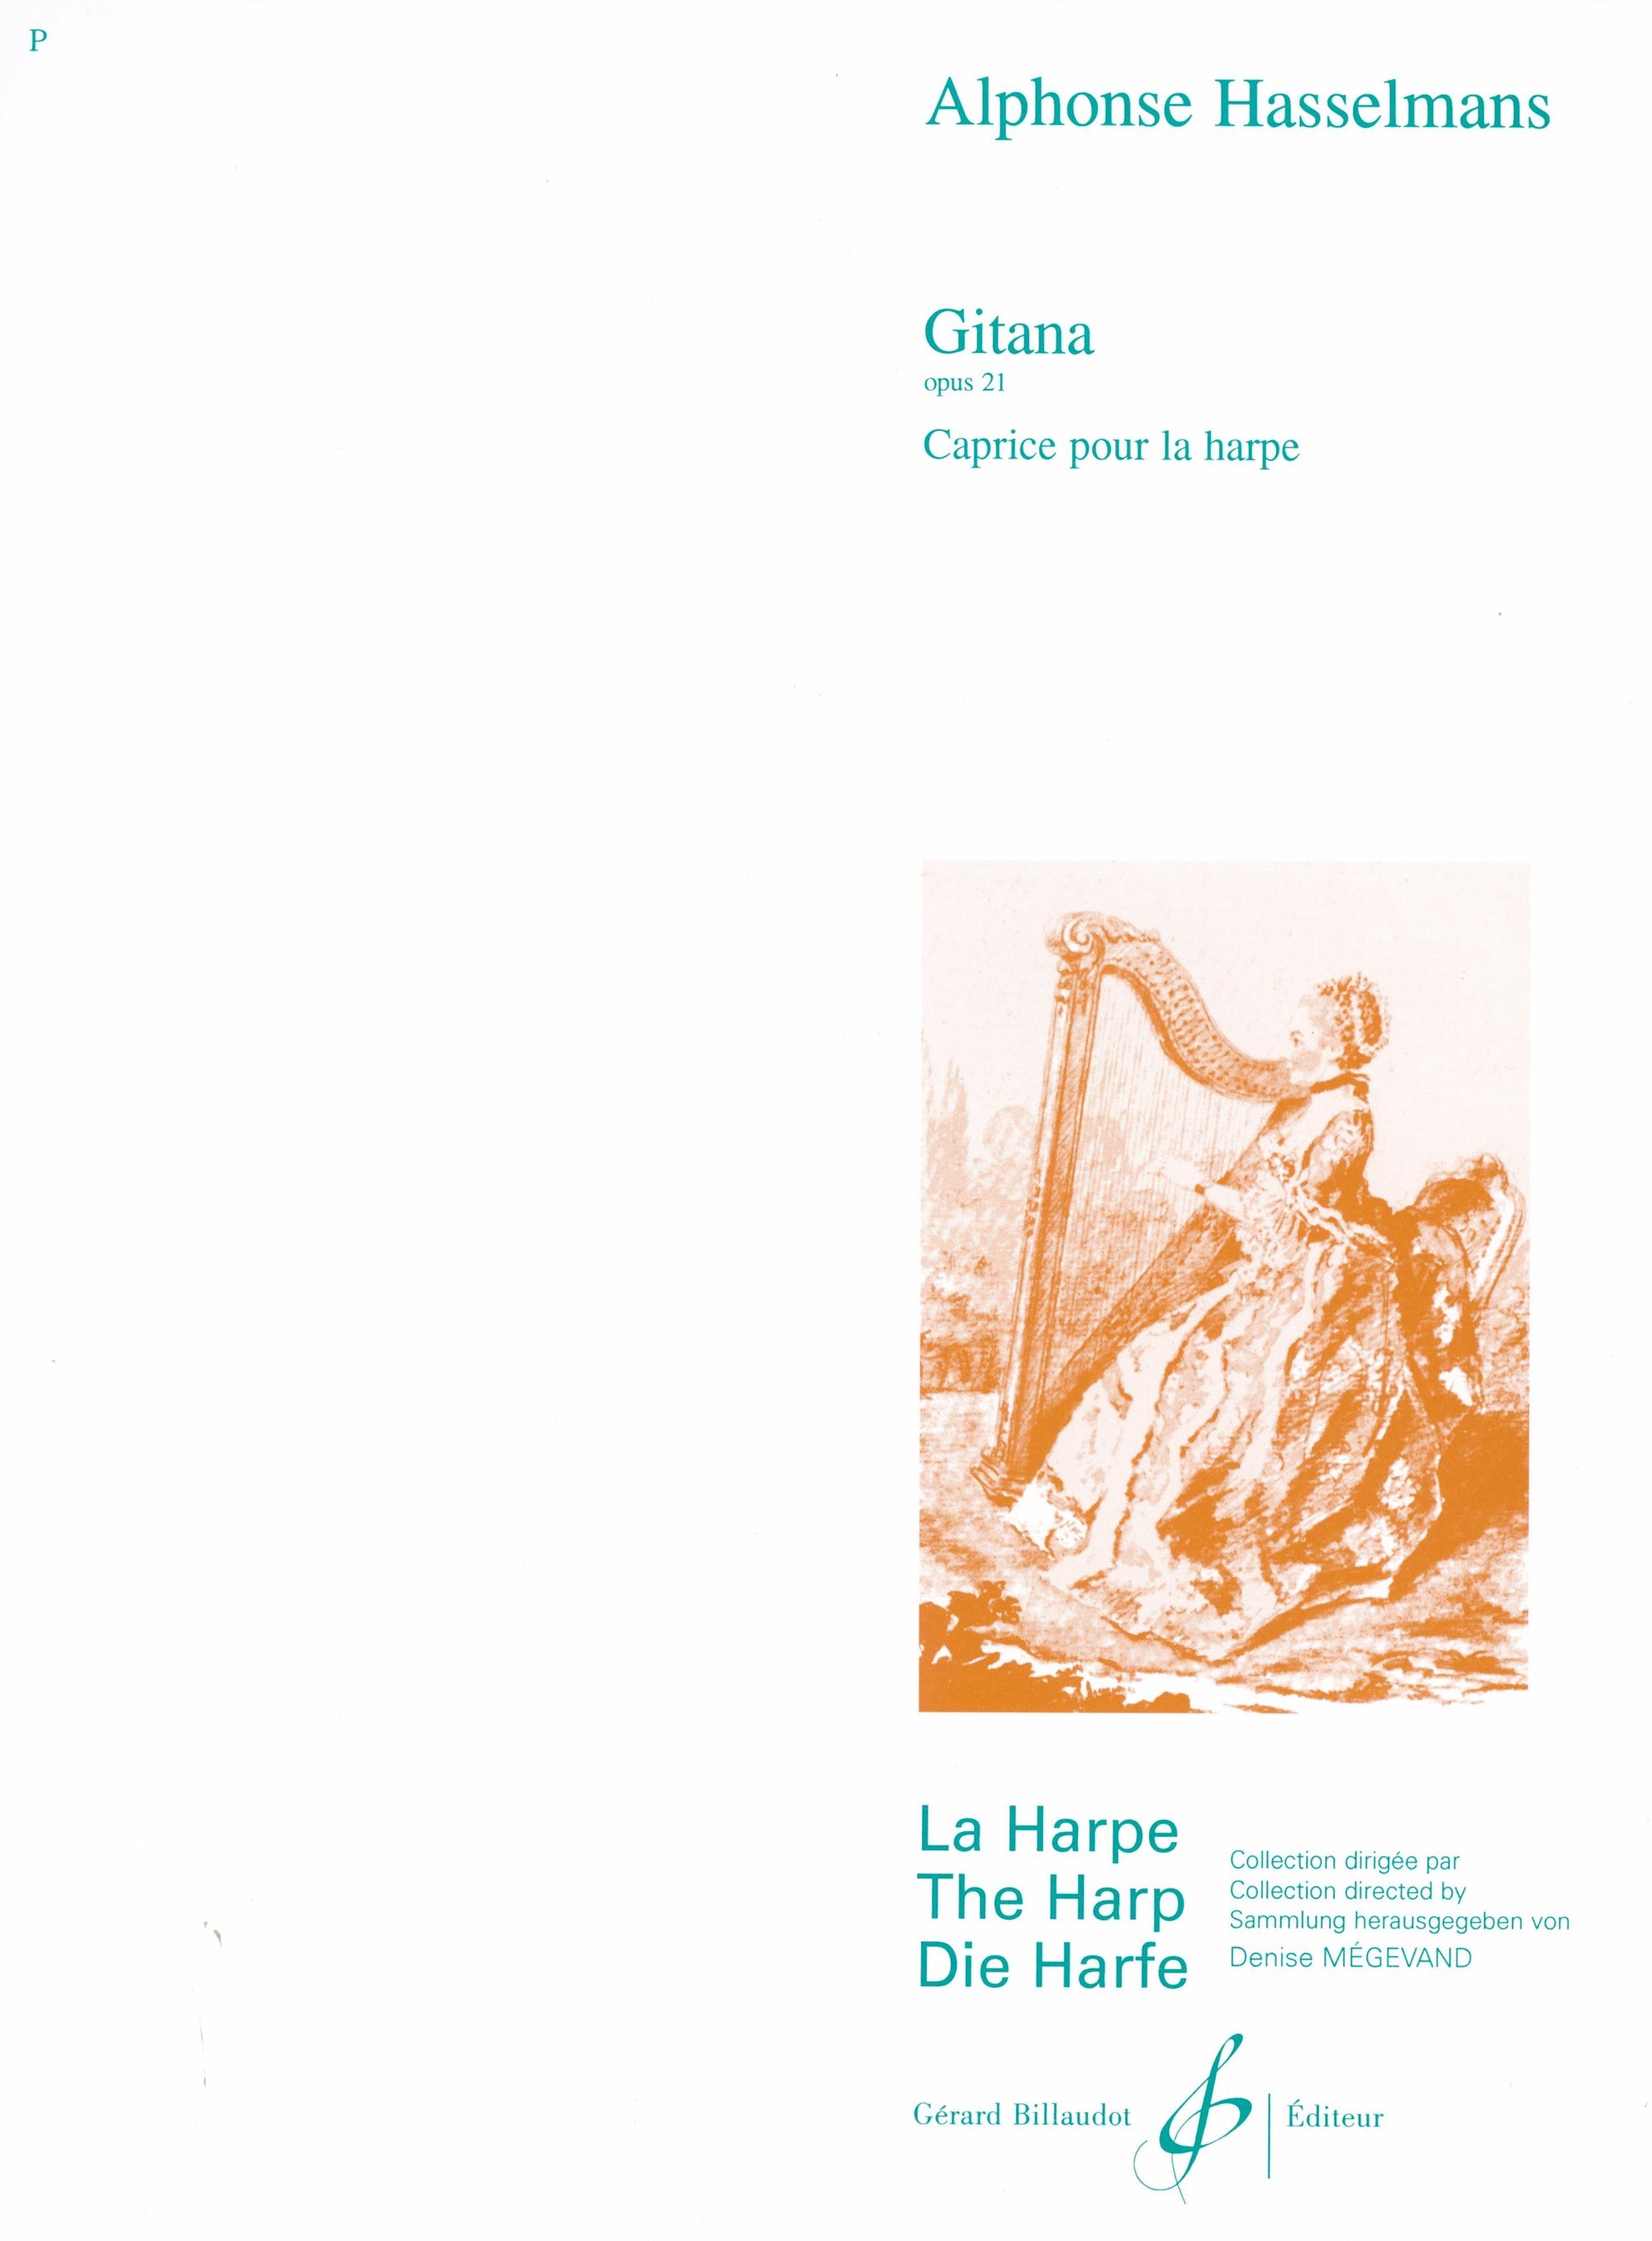 Hasselmans: Gitana, Op. 21